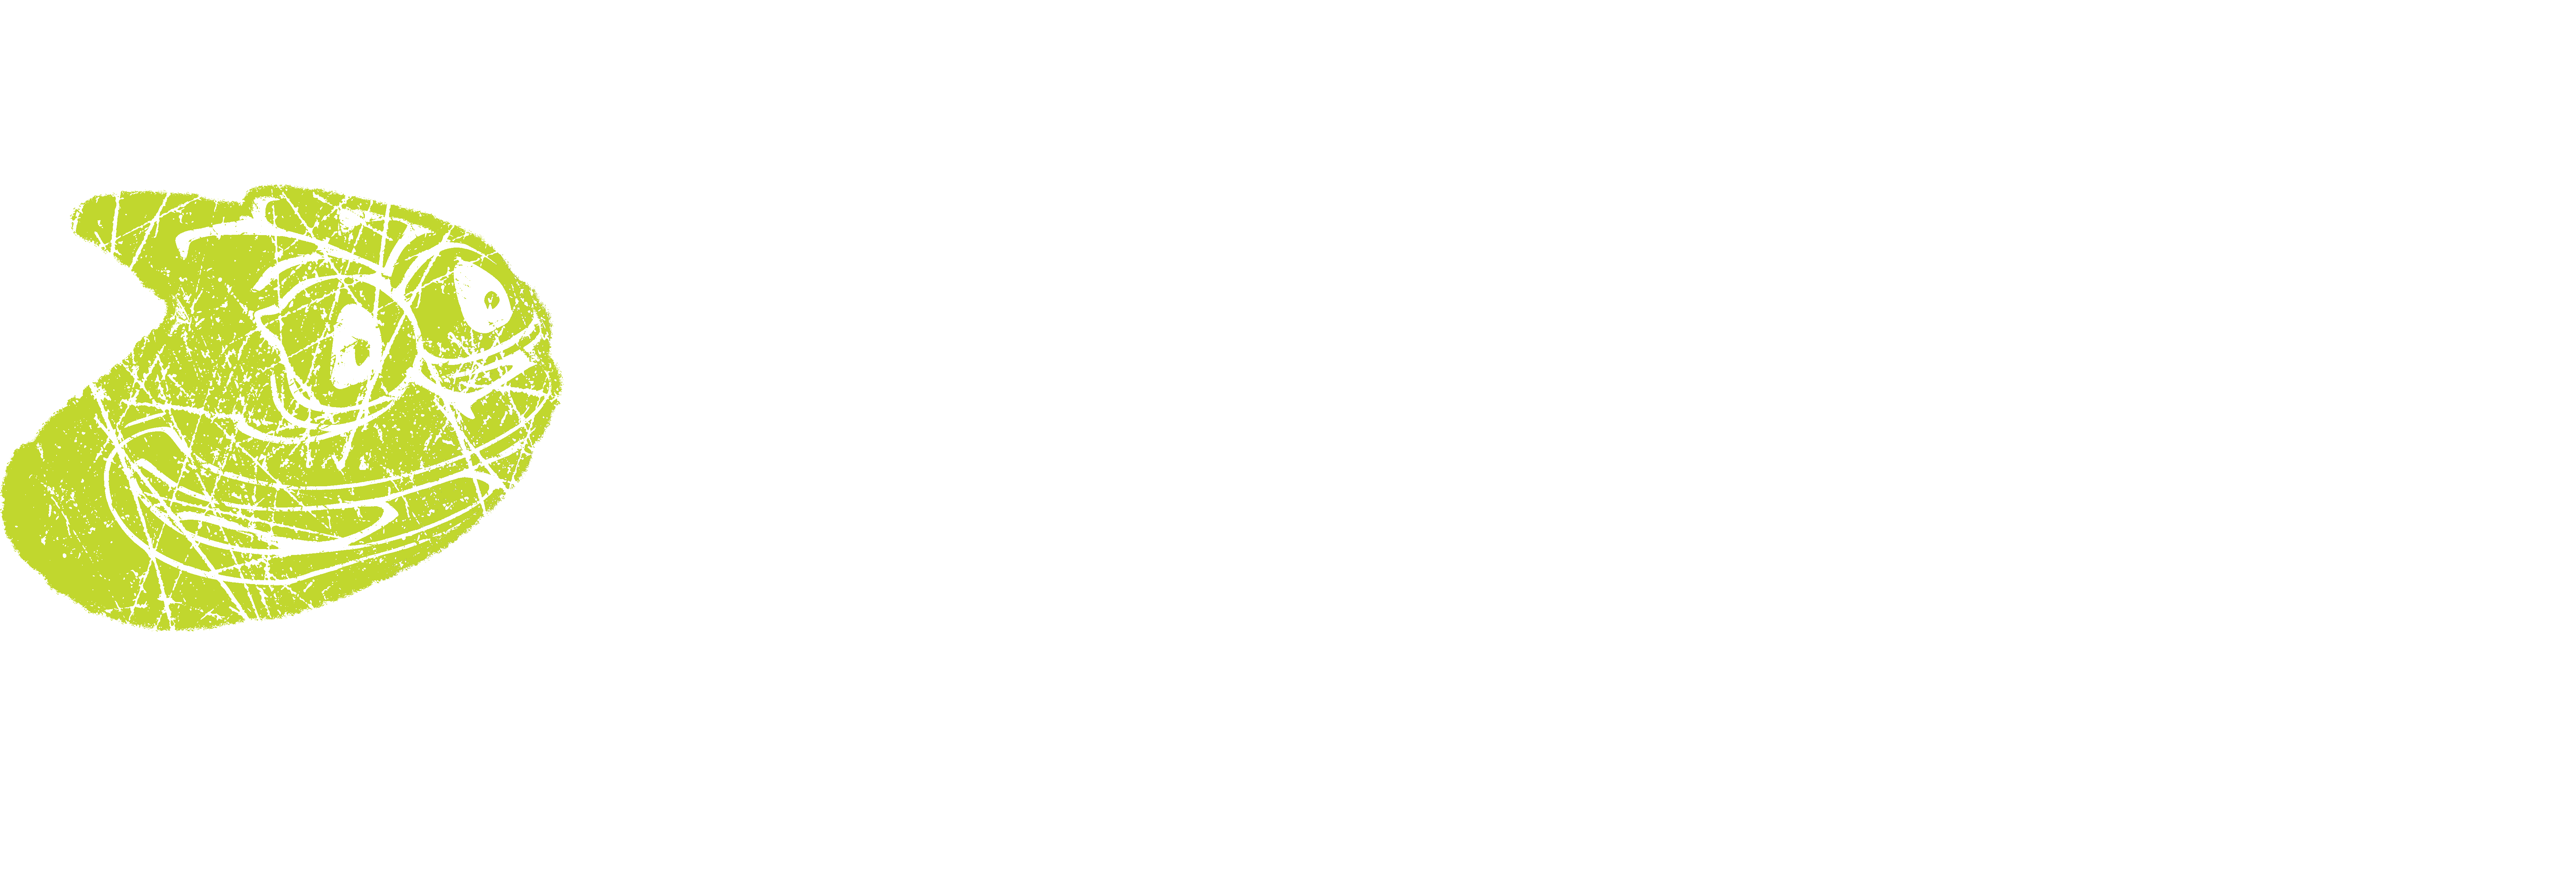 need for speed pro street logo